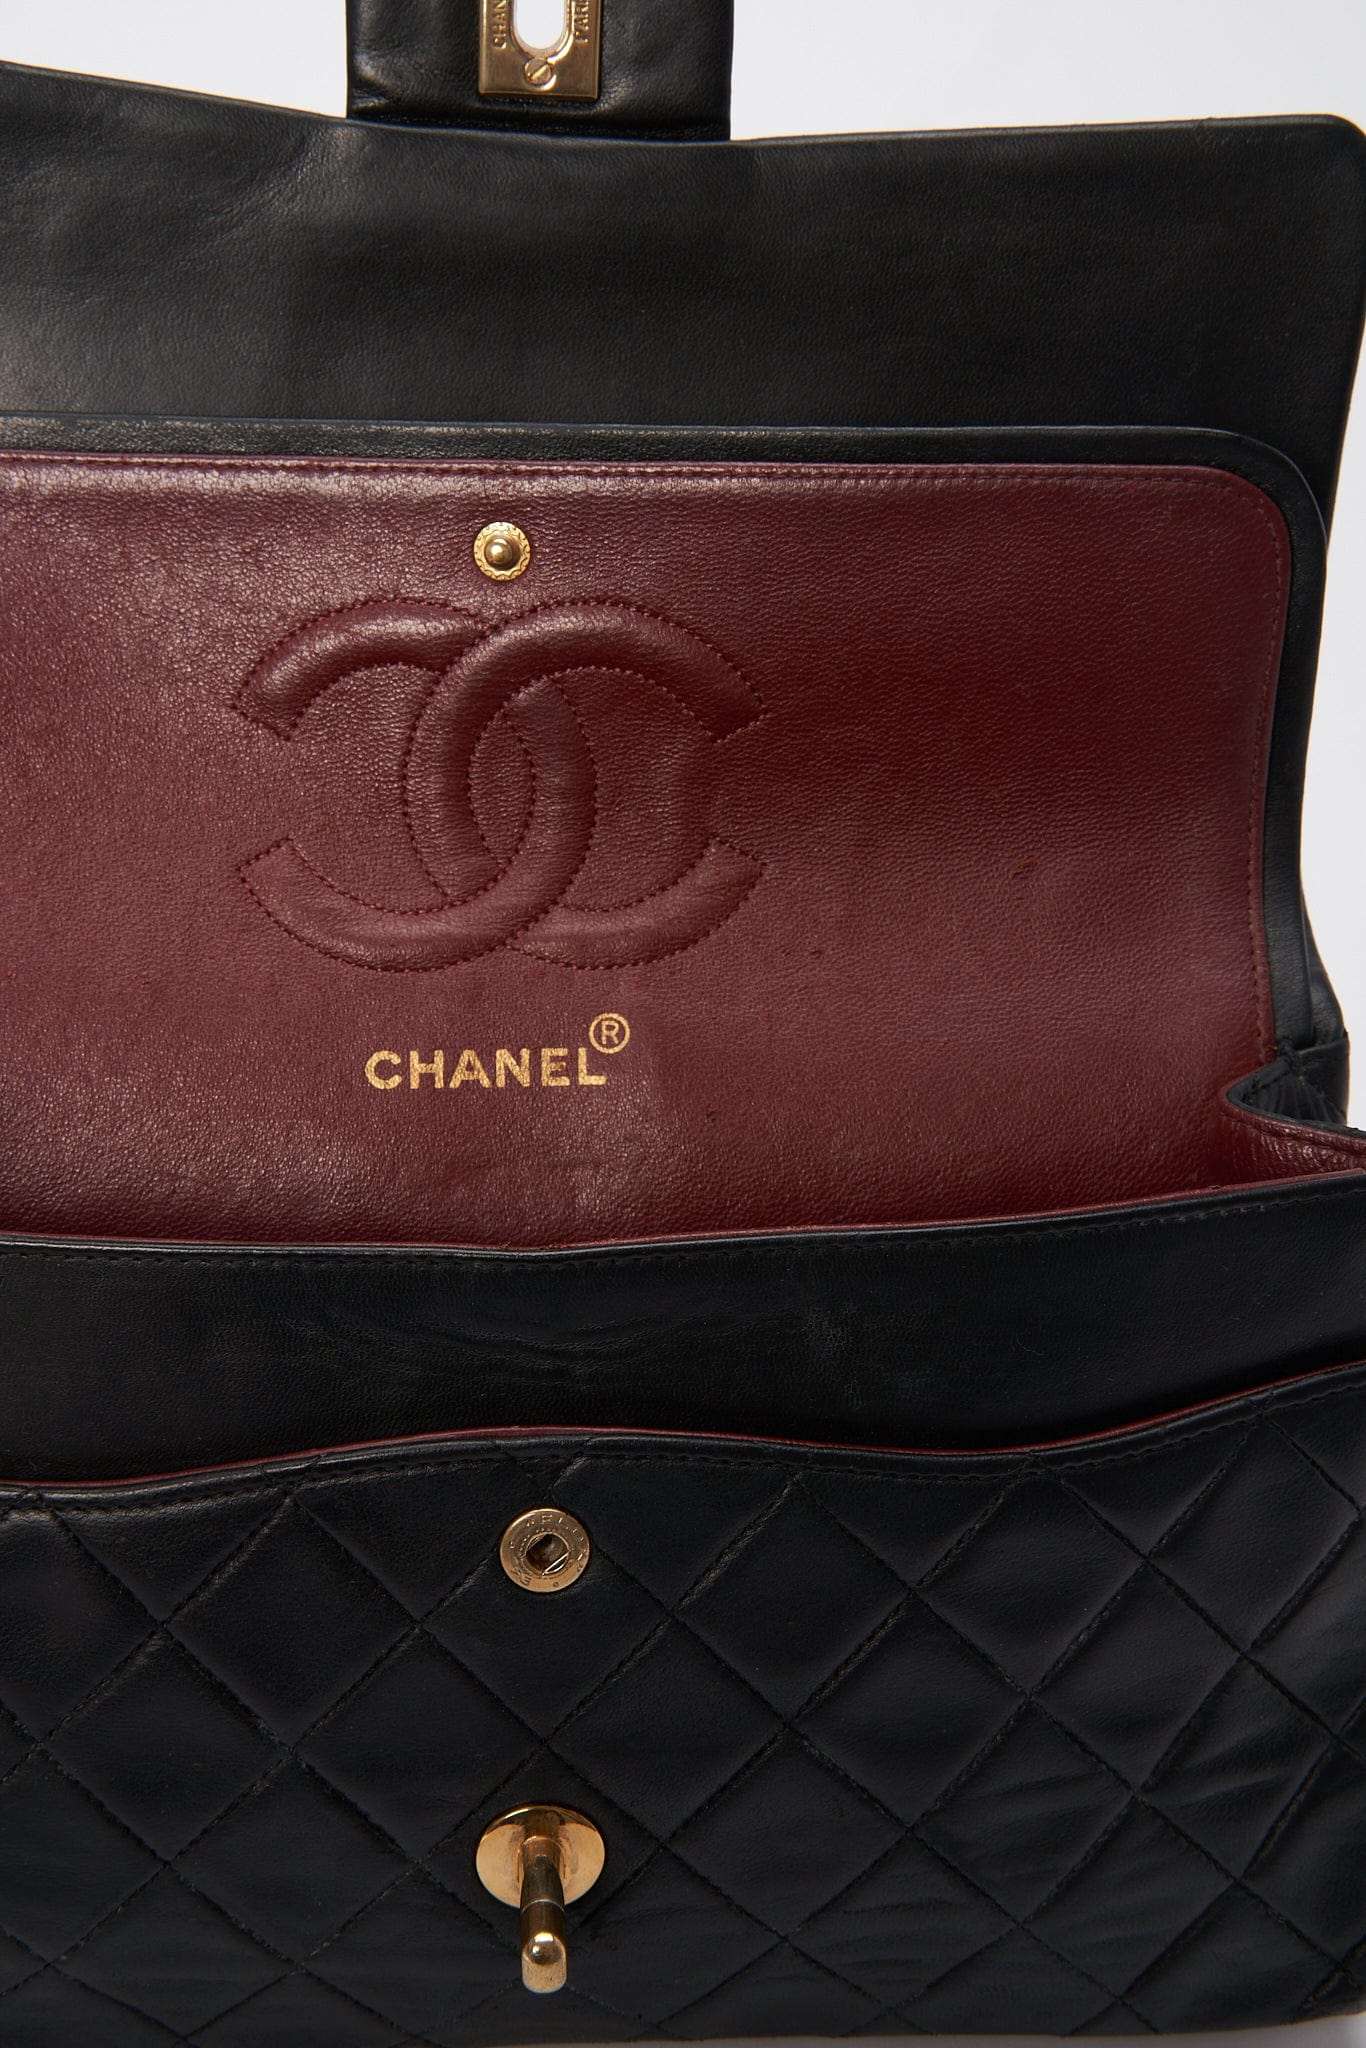 CHANEL Classic Handbag Lambskin & Gold-Tone Metal. Sky Blue -  A01112Y04059NA104 - Handbags | Chanel handbags classic, Chanel classic flap  bag, Chanel bag